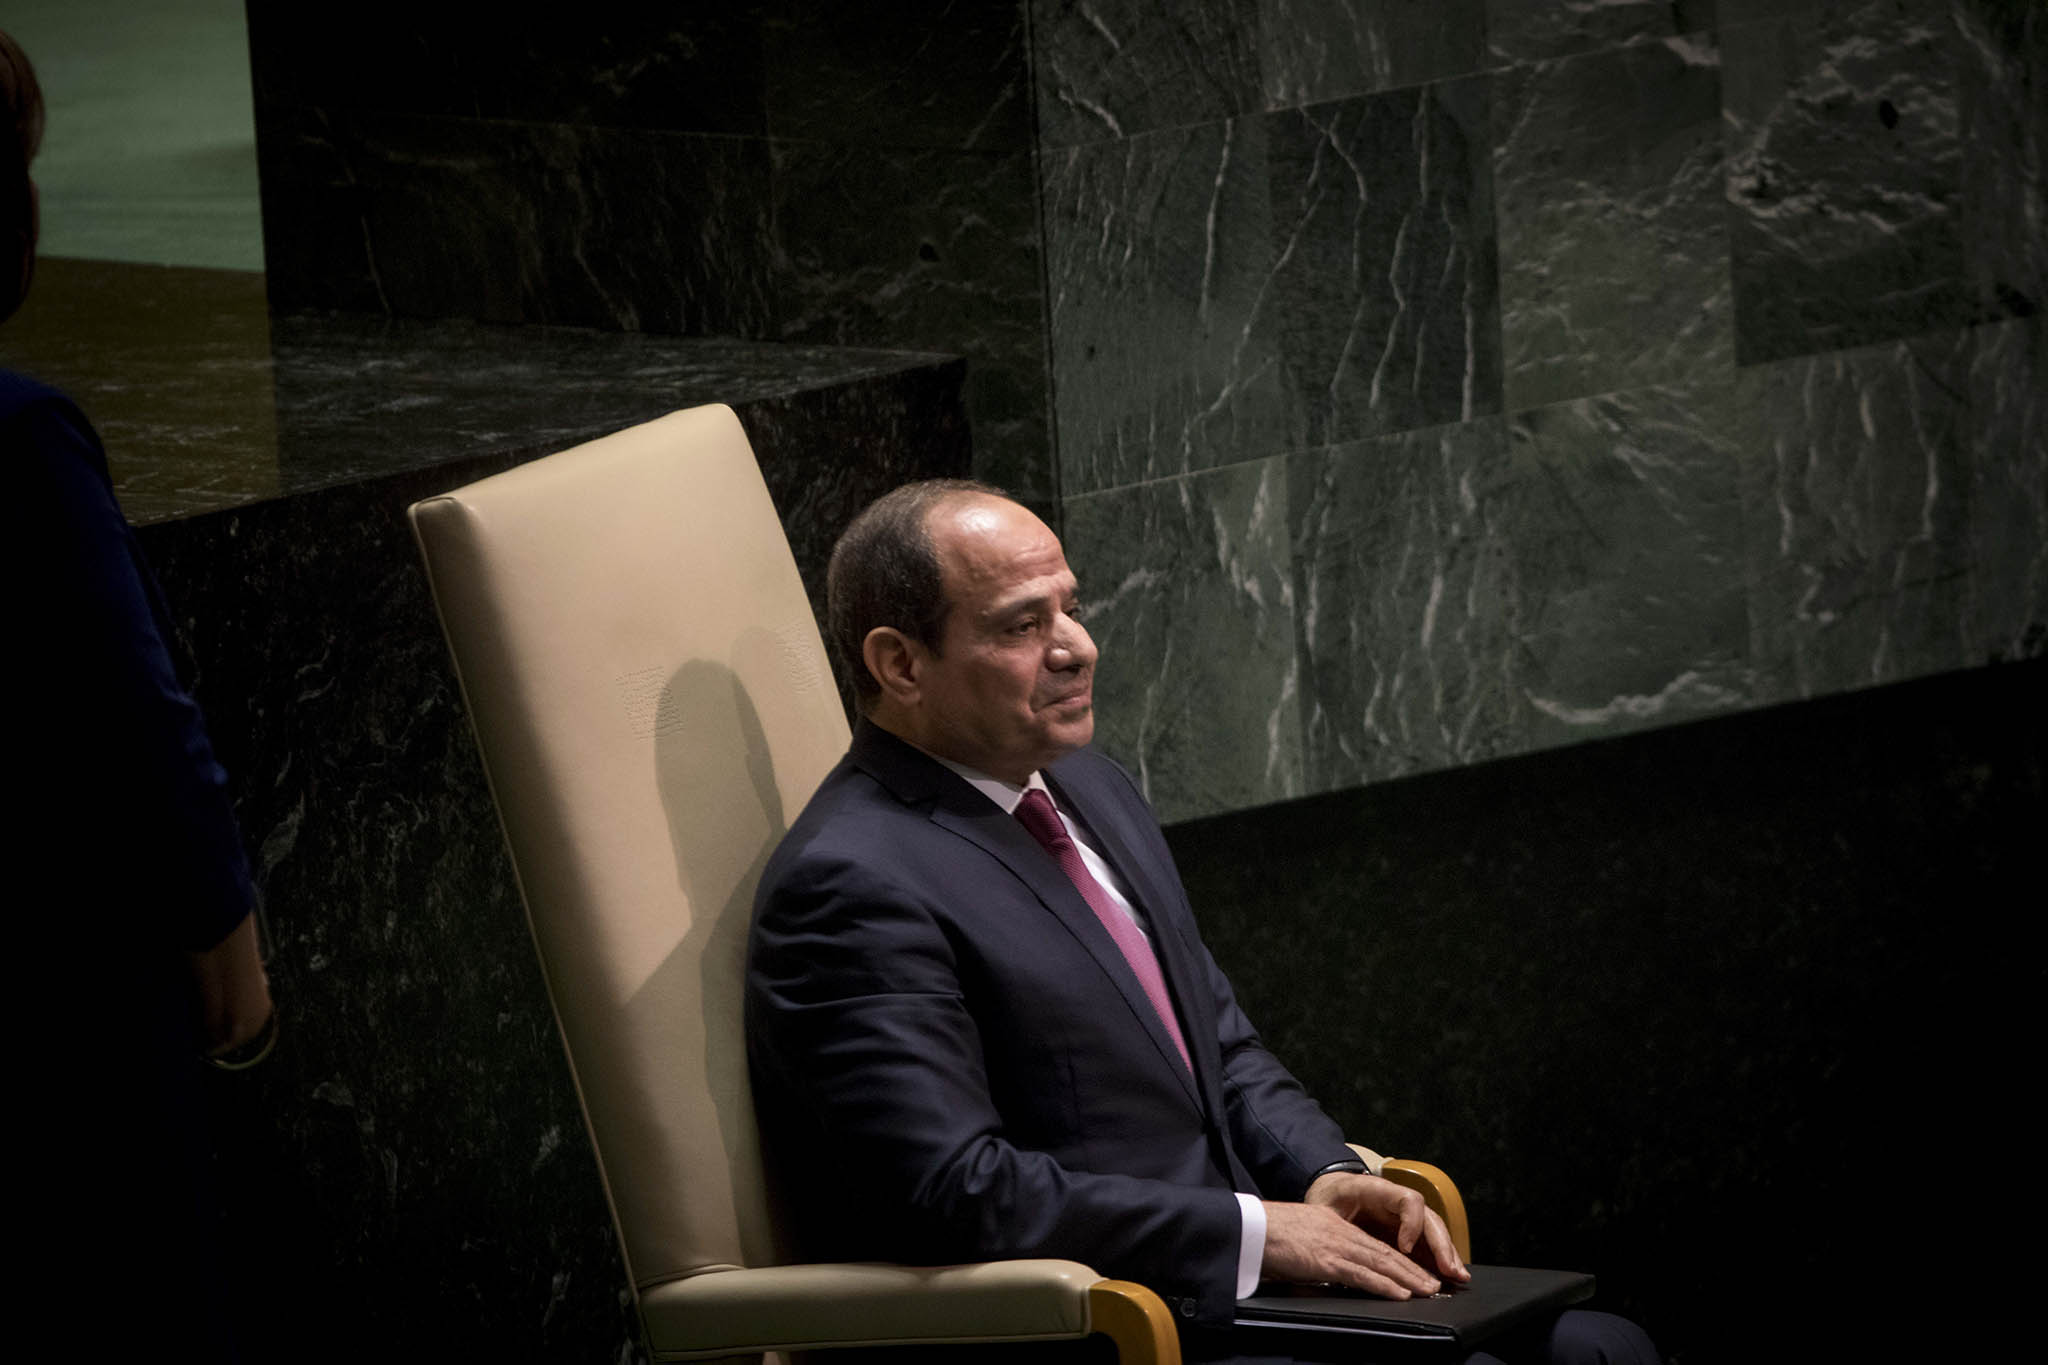 President Abdel Fattah el-Sisi of Egypt before speaking at the U.N. General Assembly in New York. September 24, 2019. (Dave Sanders/The New York Times)